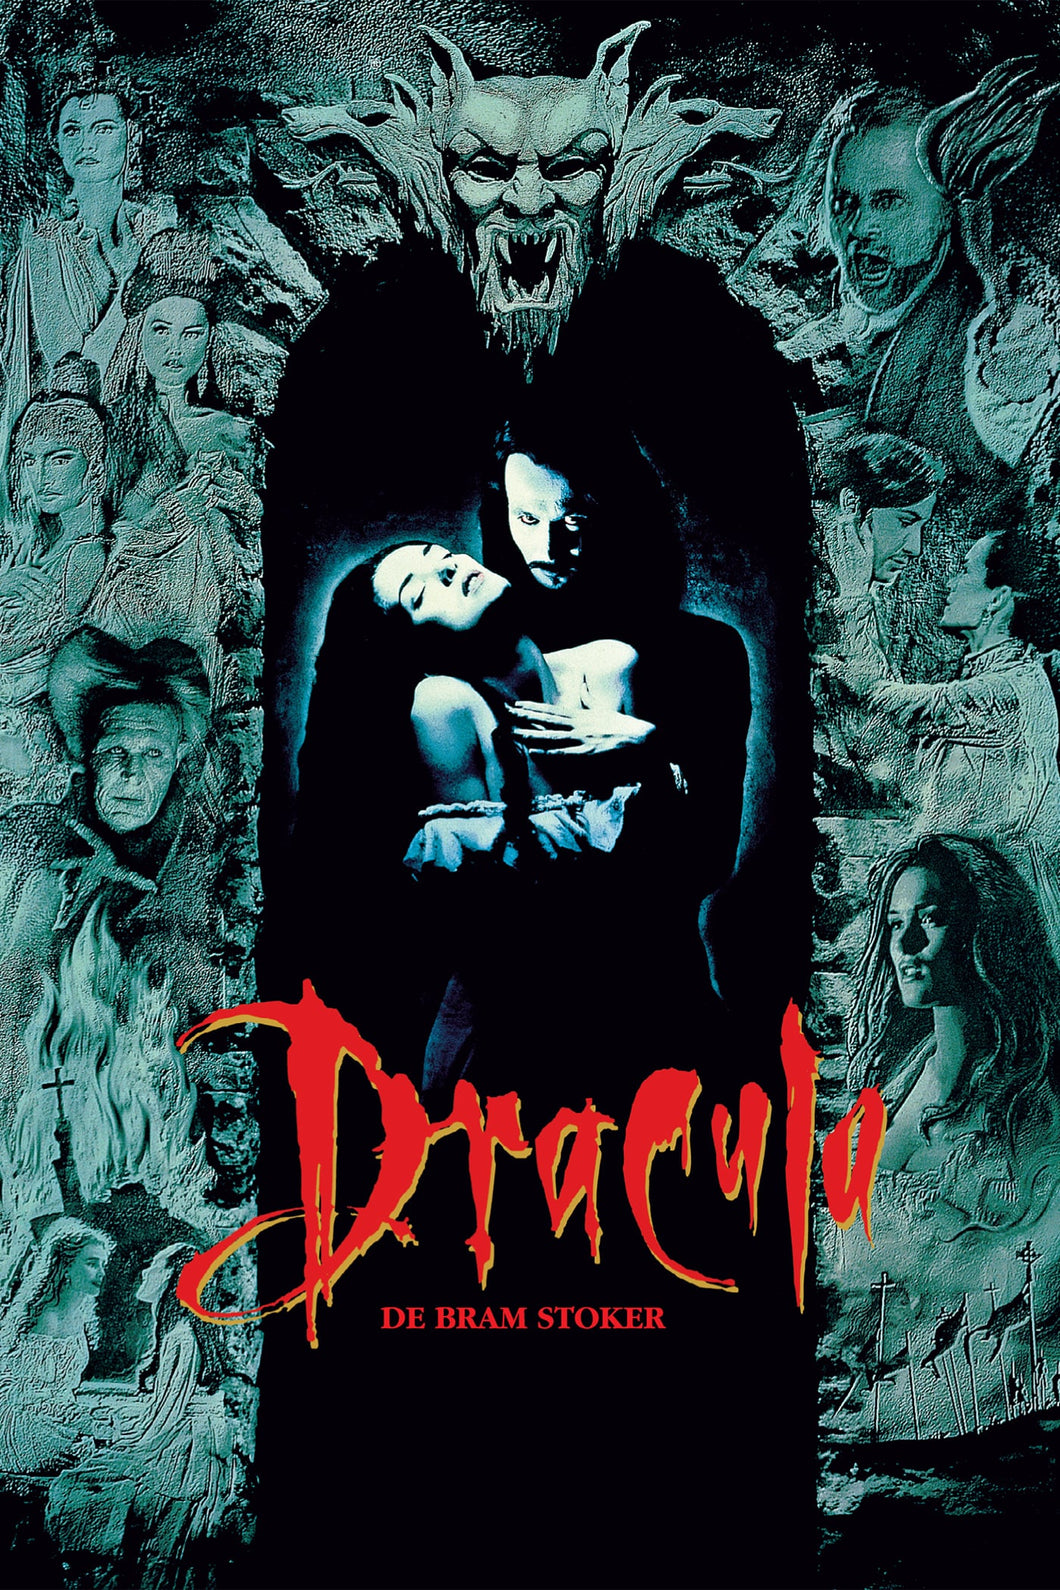 Poster Pelicula Dracula